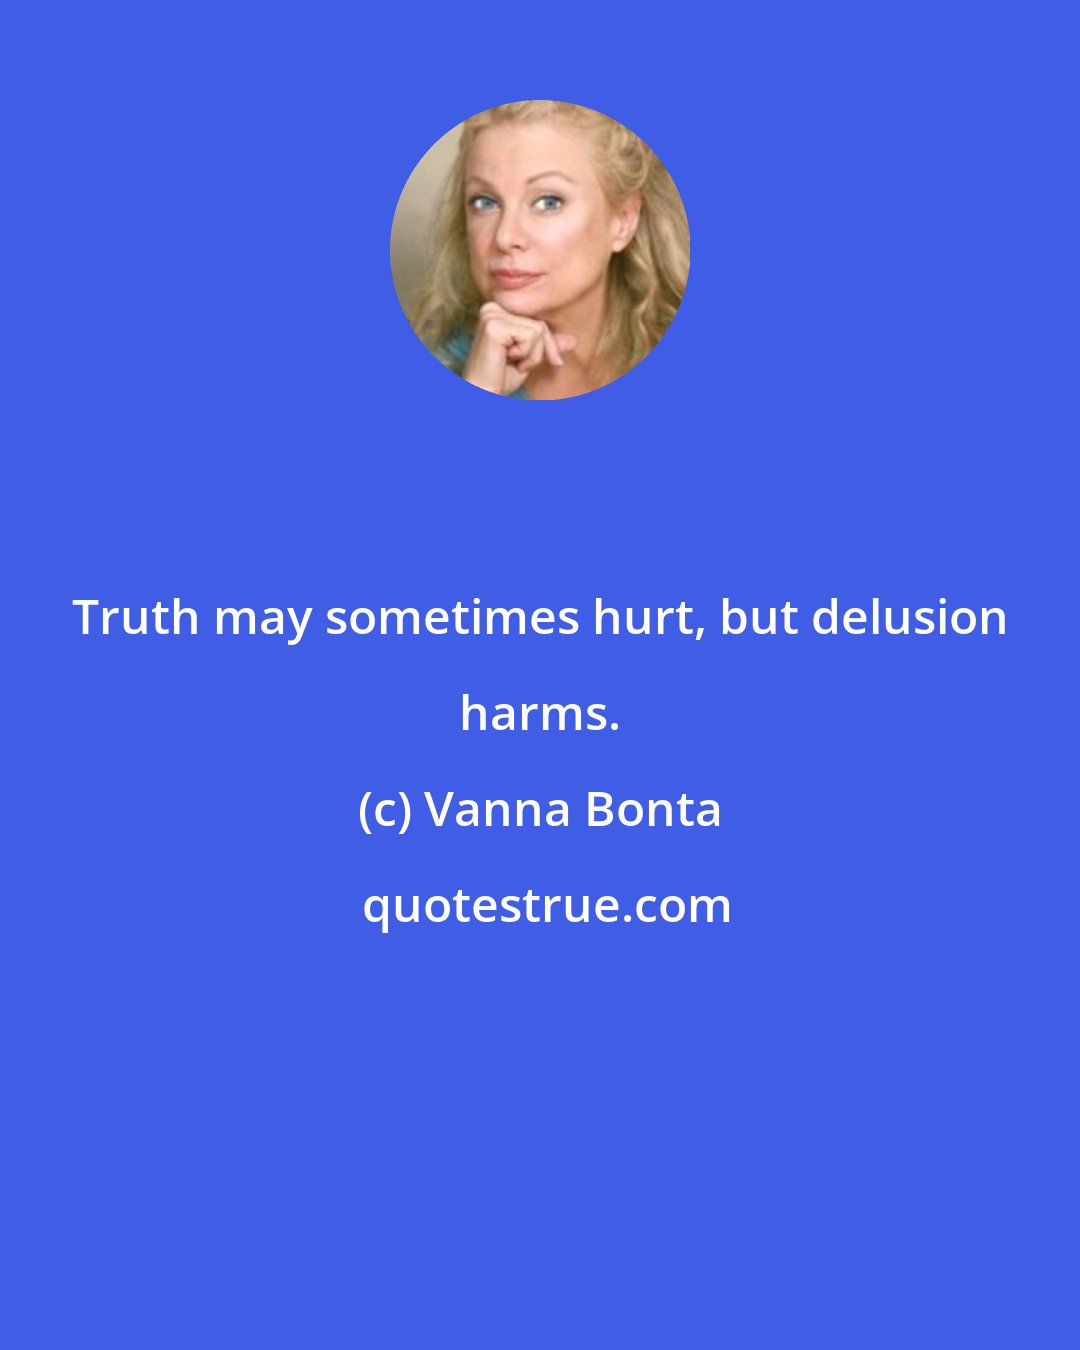 Vanna Bonta: Truth may sometimes hurt, but delusion harms.